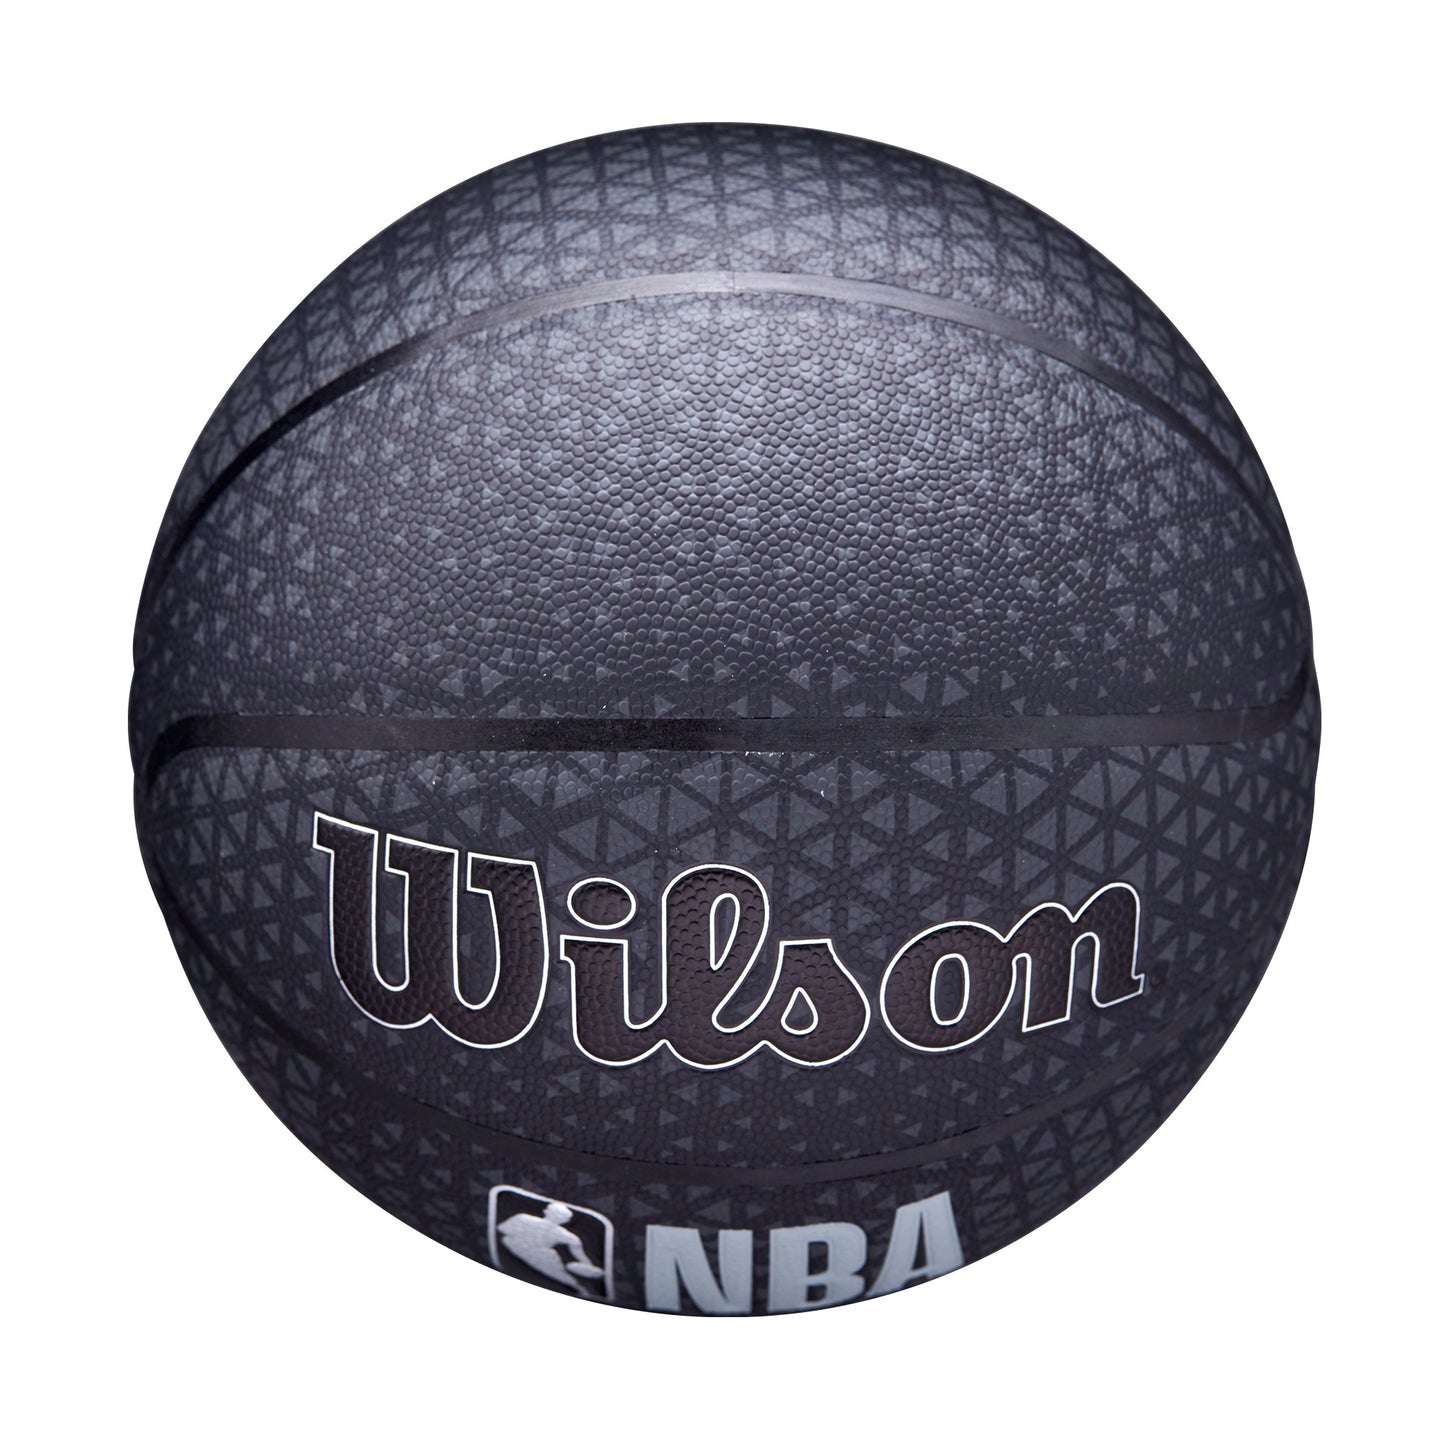 Wilson NBA FORGE PRO PRINTED BASKETBALL Black WTB8001XB